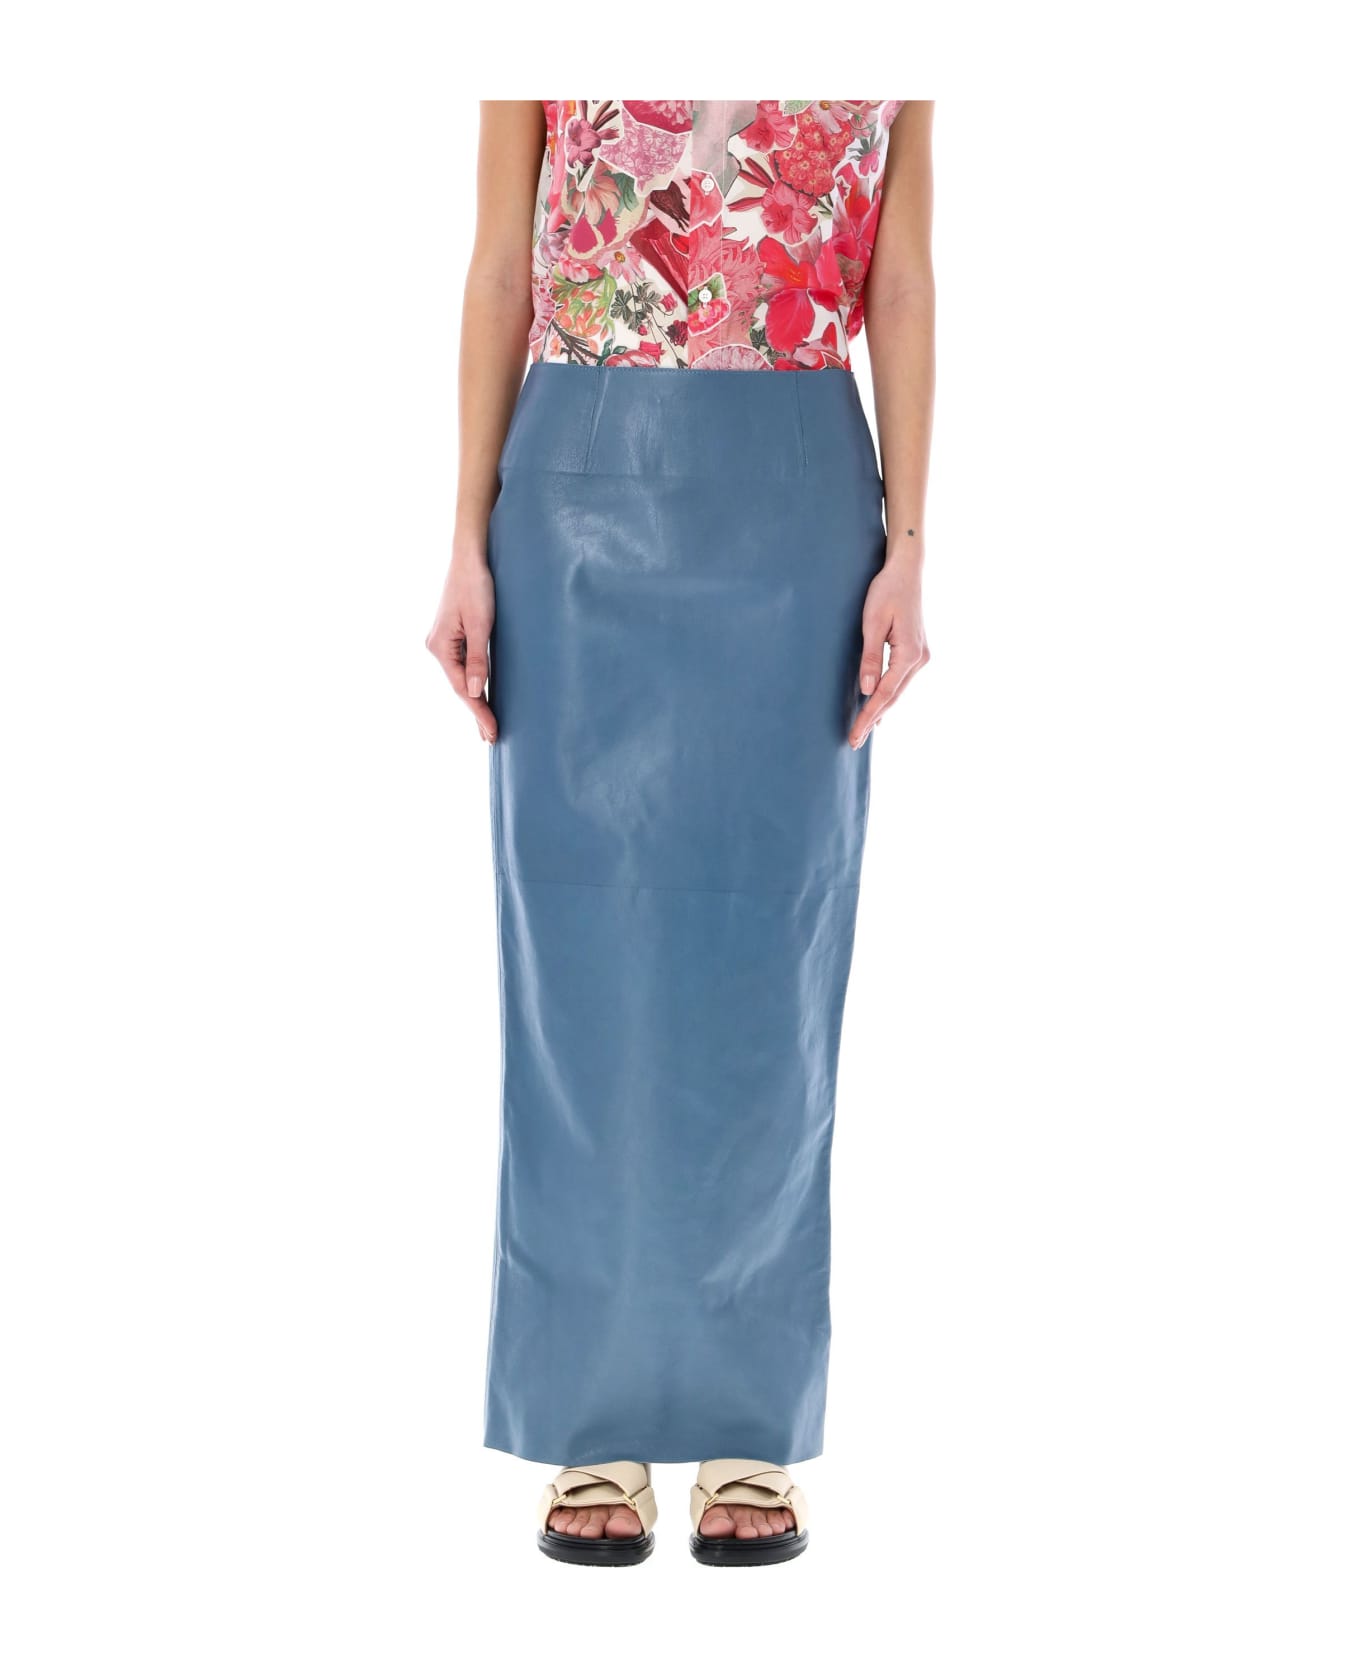 Marni Shiny Leather Pencil Skirt - OPAL